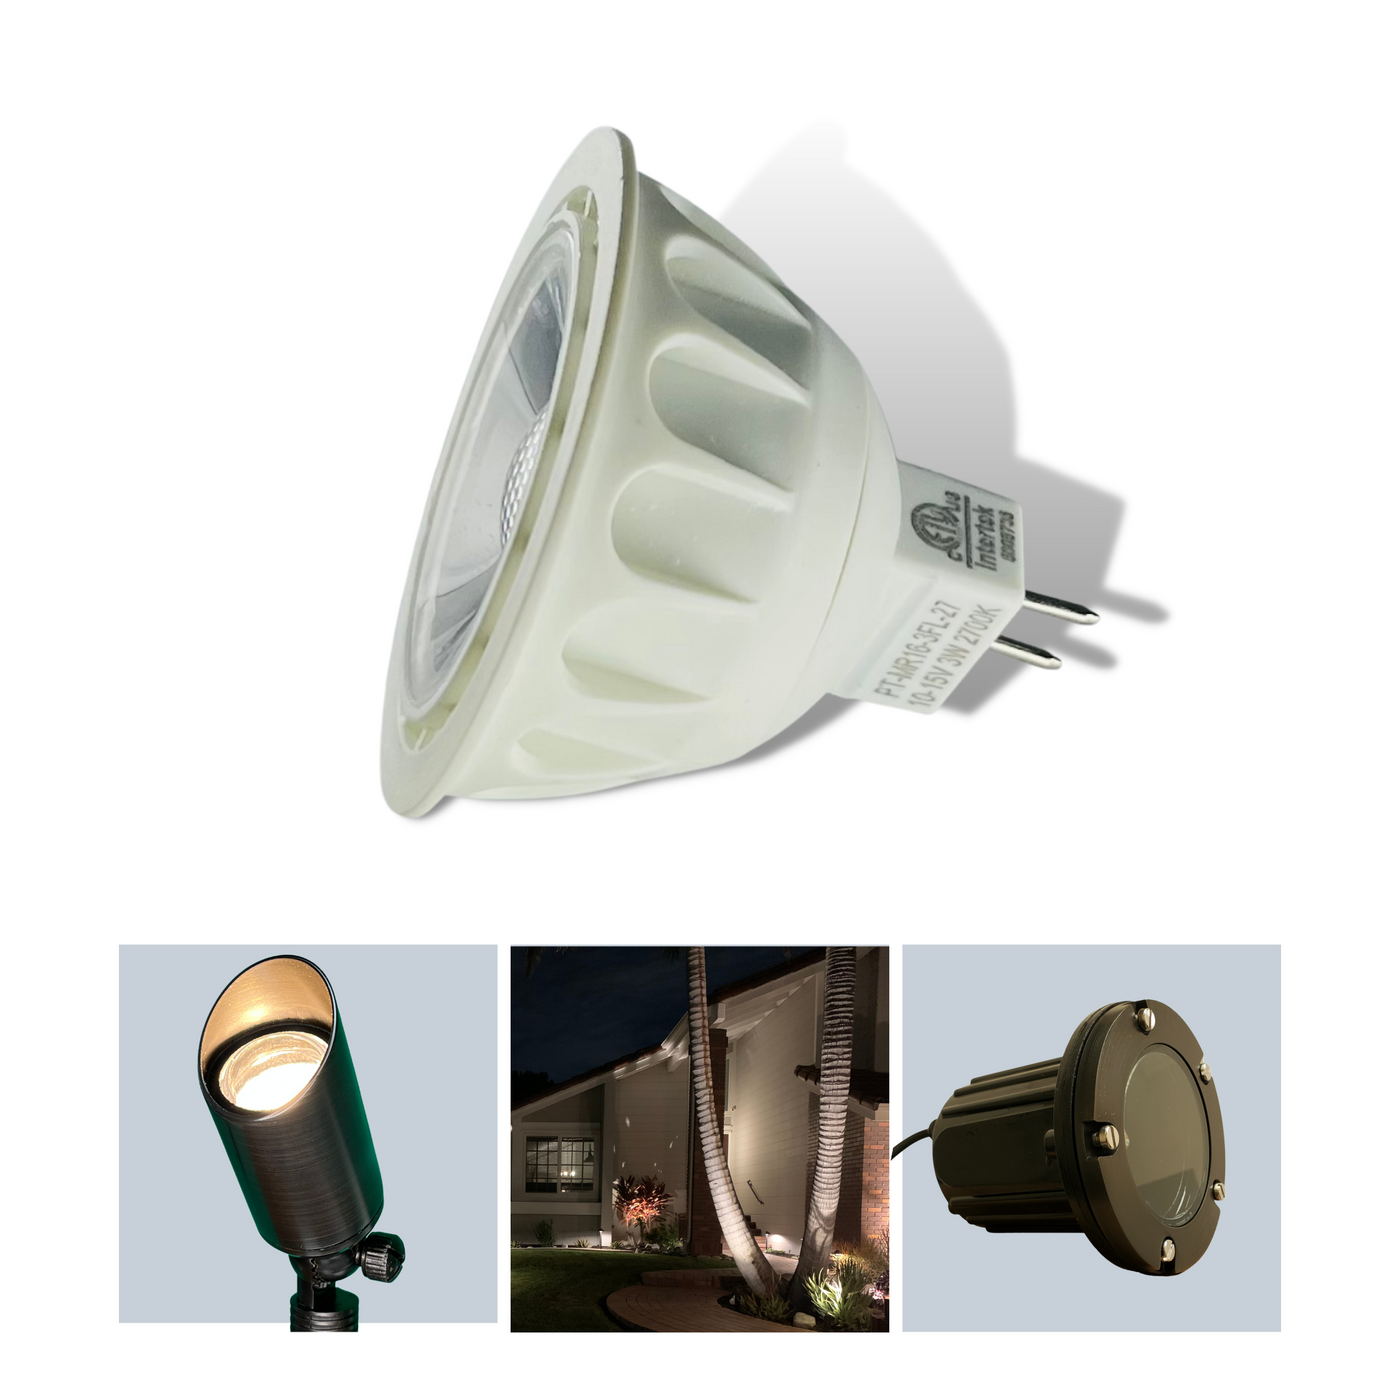 LED 7watt GU5.3 MR16 40° 5000K flood light bulb cool white dimmable low  voltage